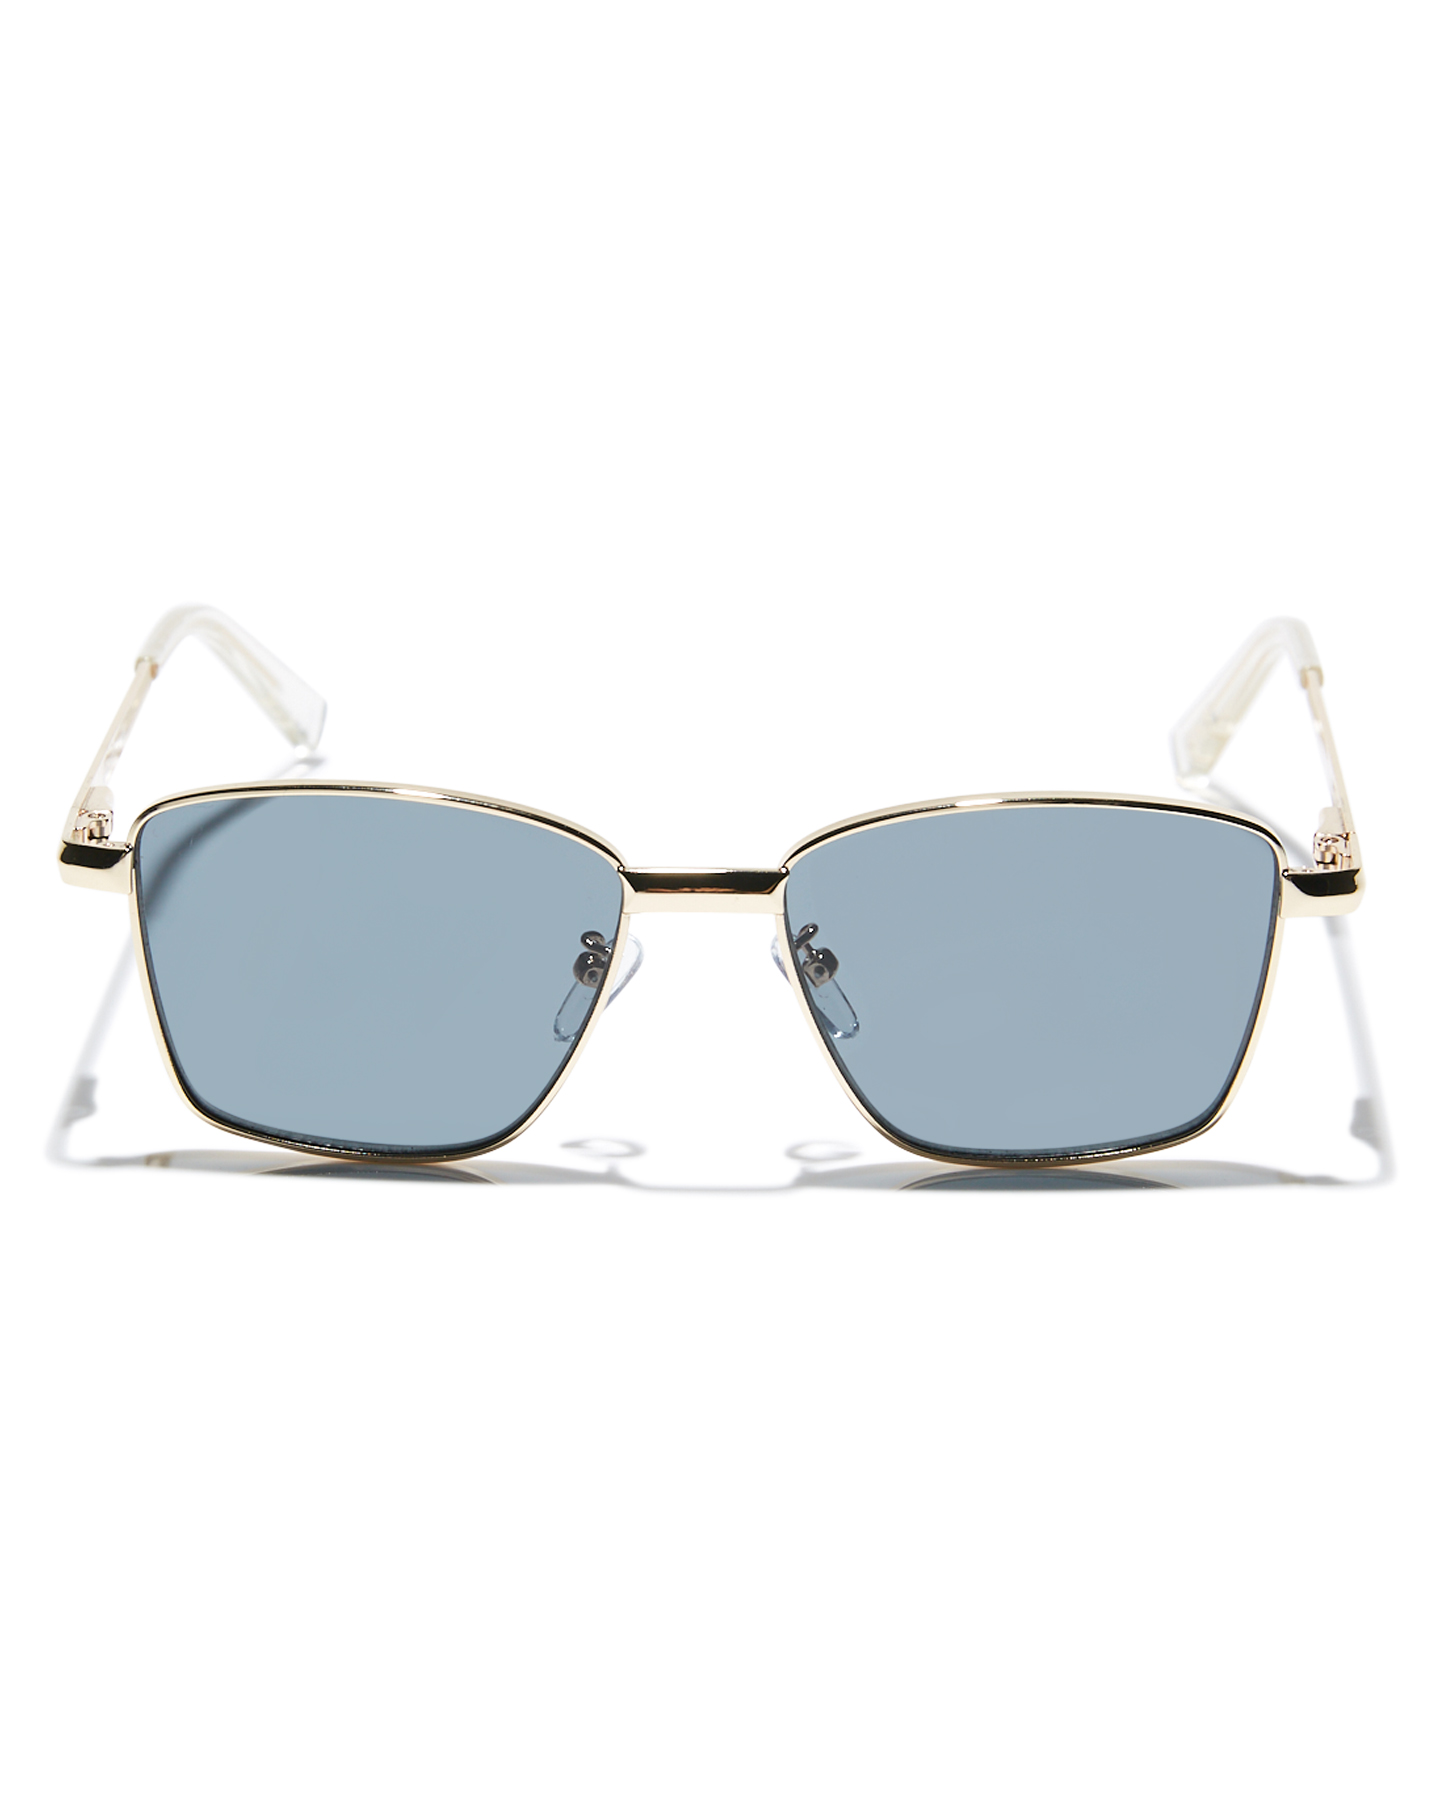 Le Specs Supastar Sunglasses - Gold | SurfStitch